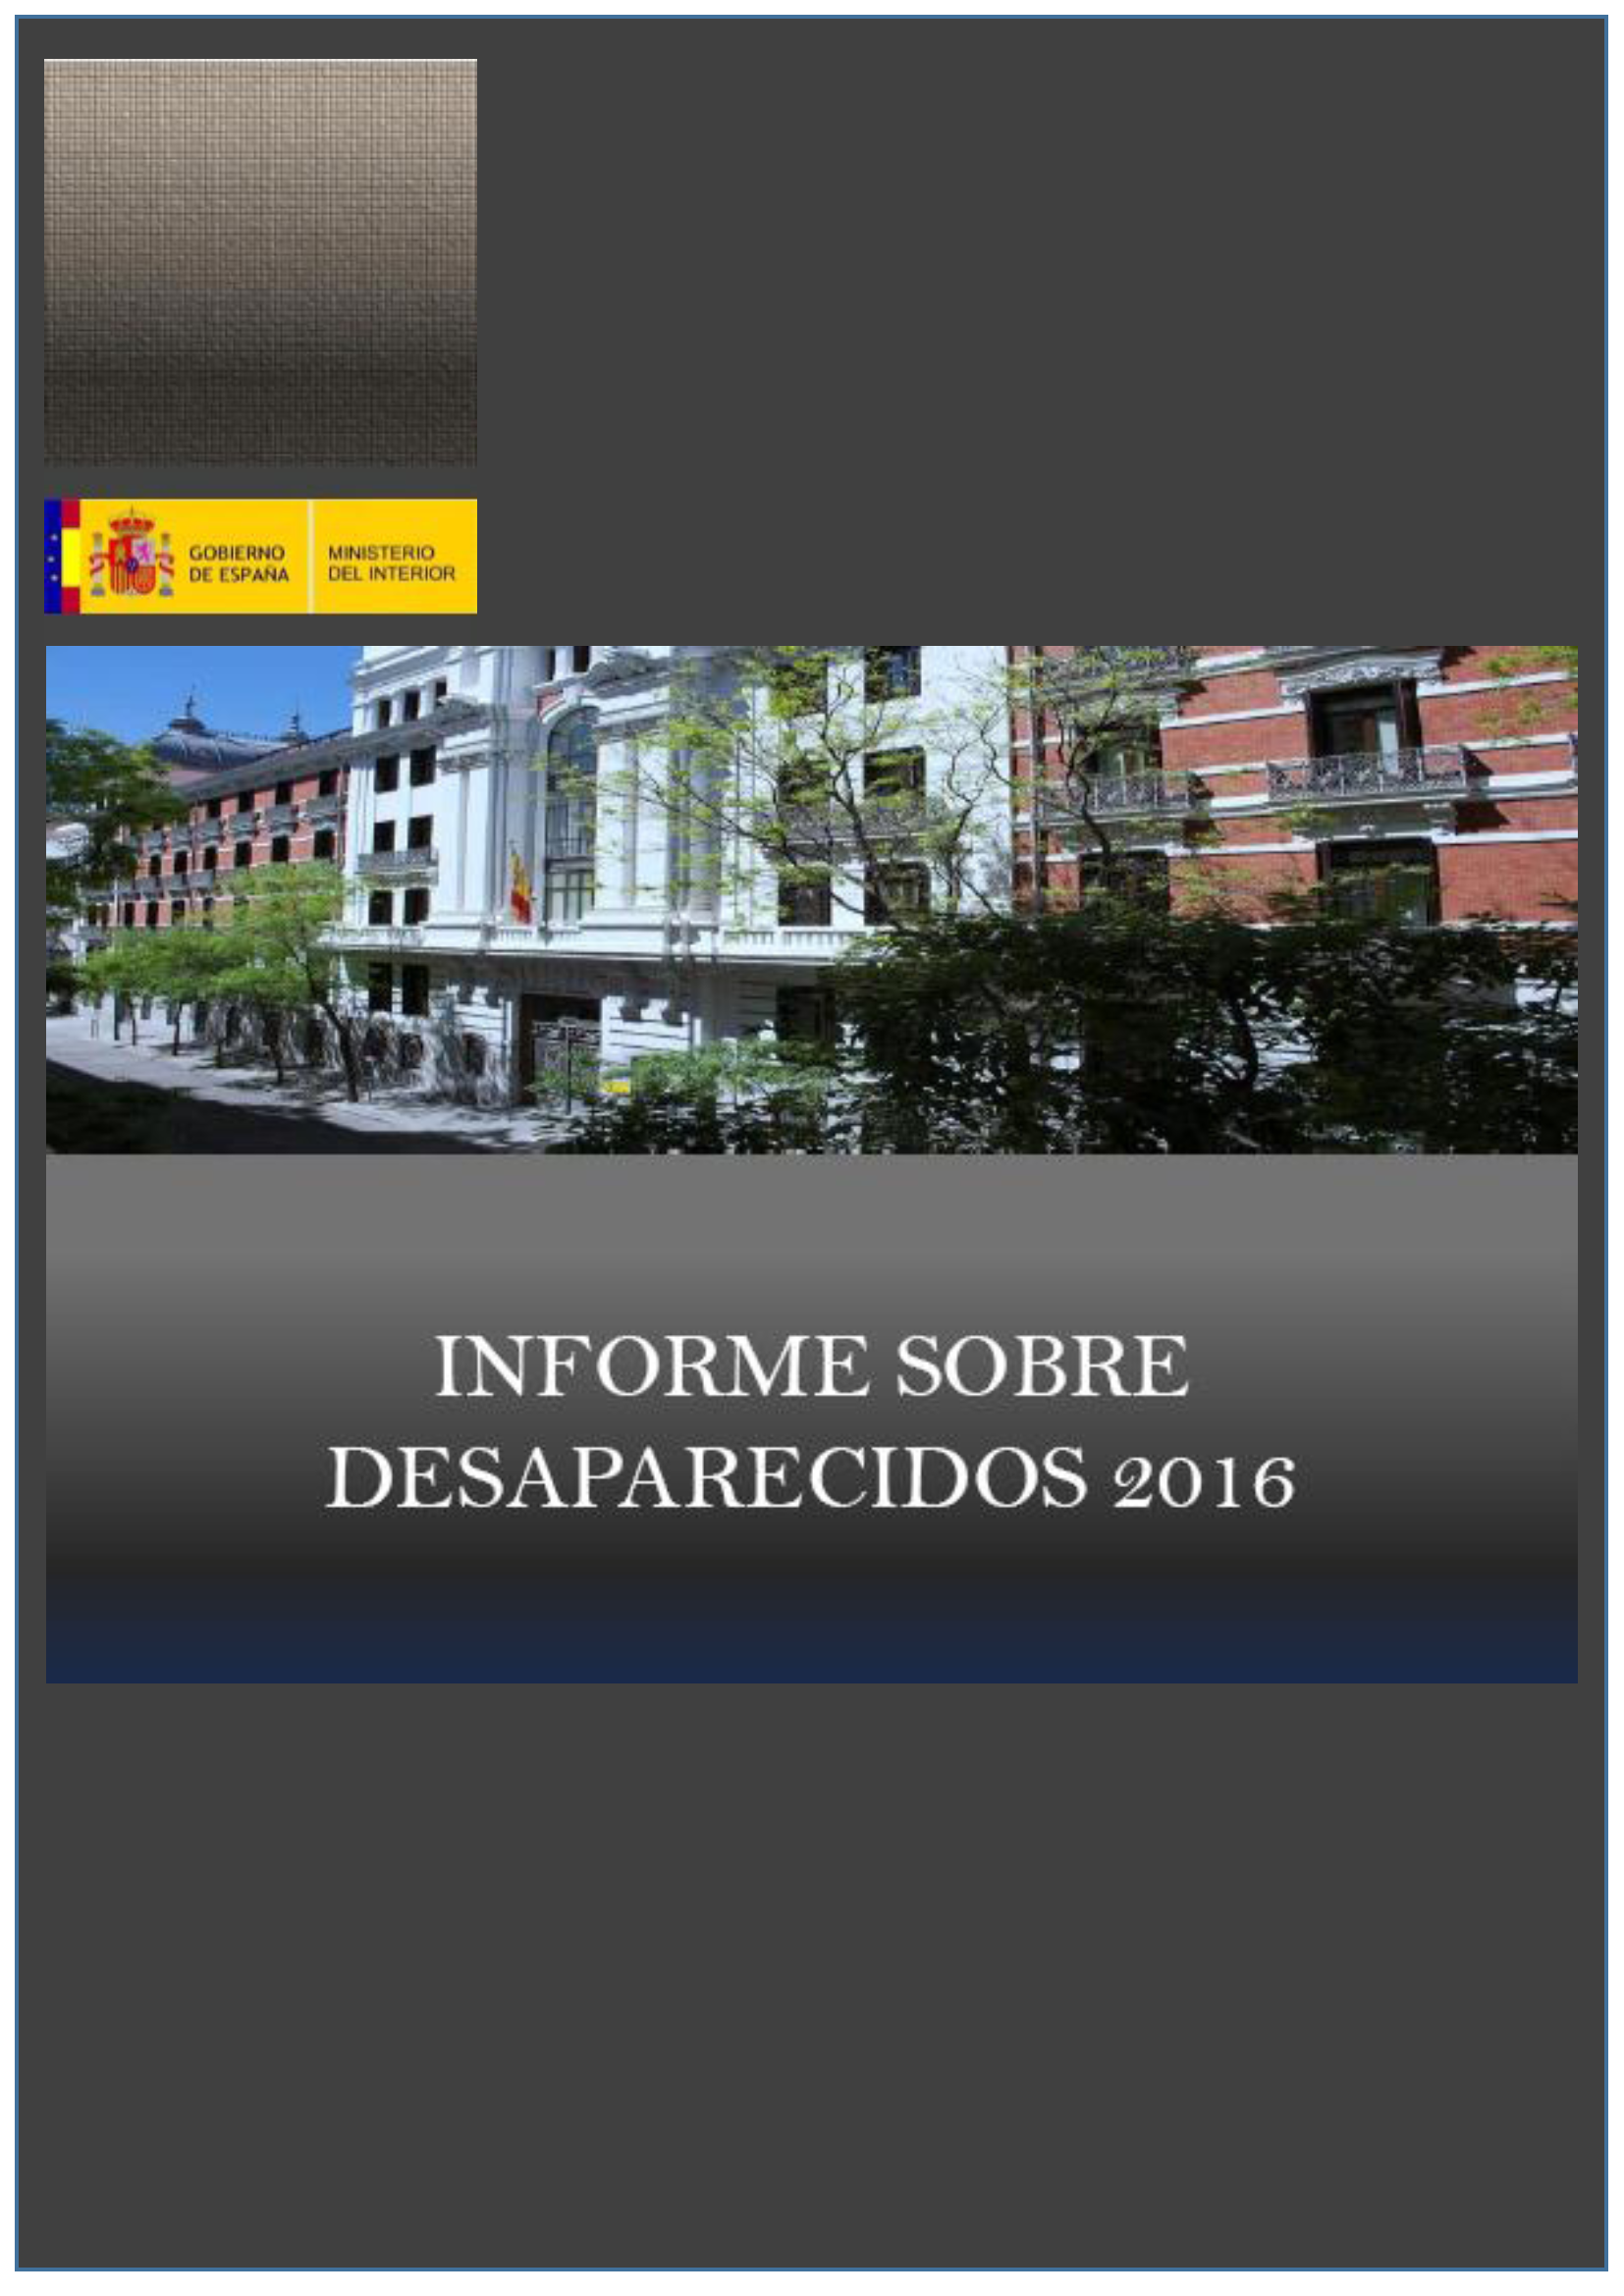 Informe 2016 sobre personas desaparecidas en España